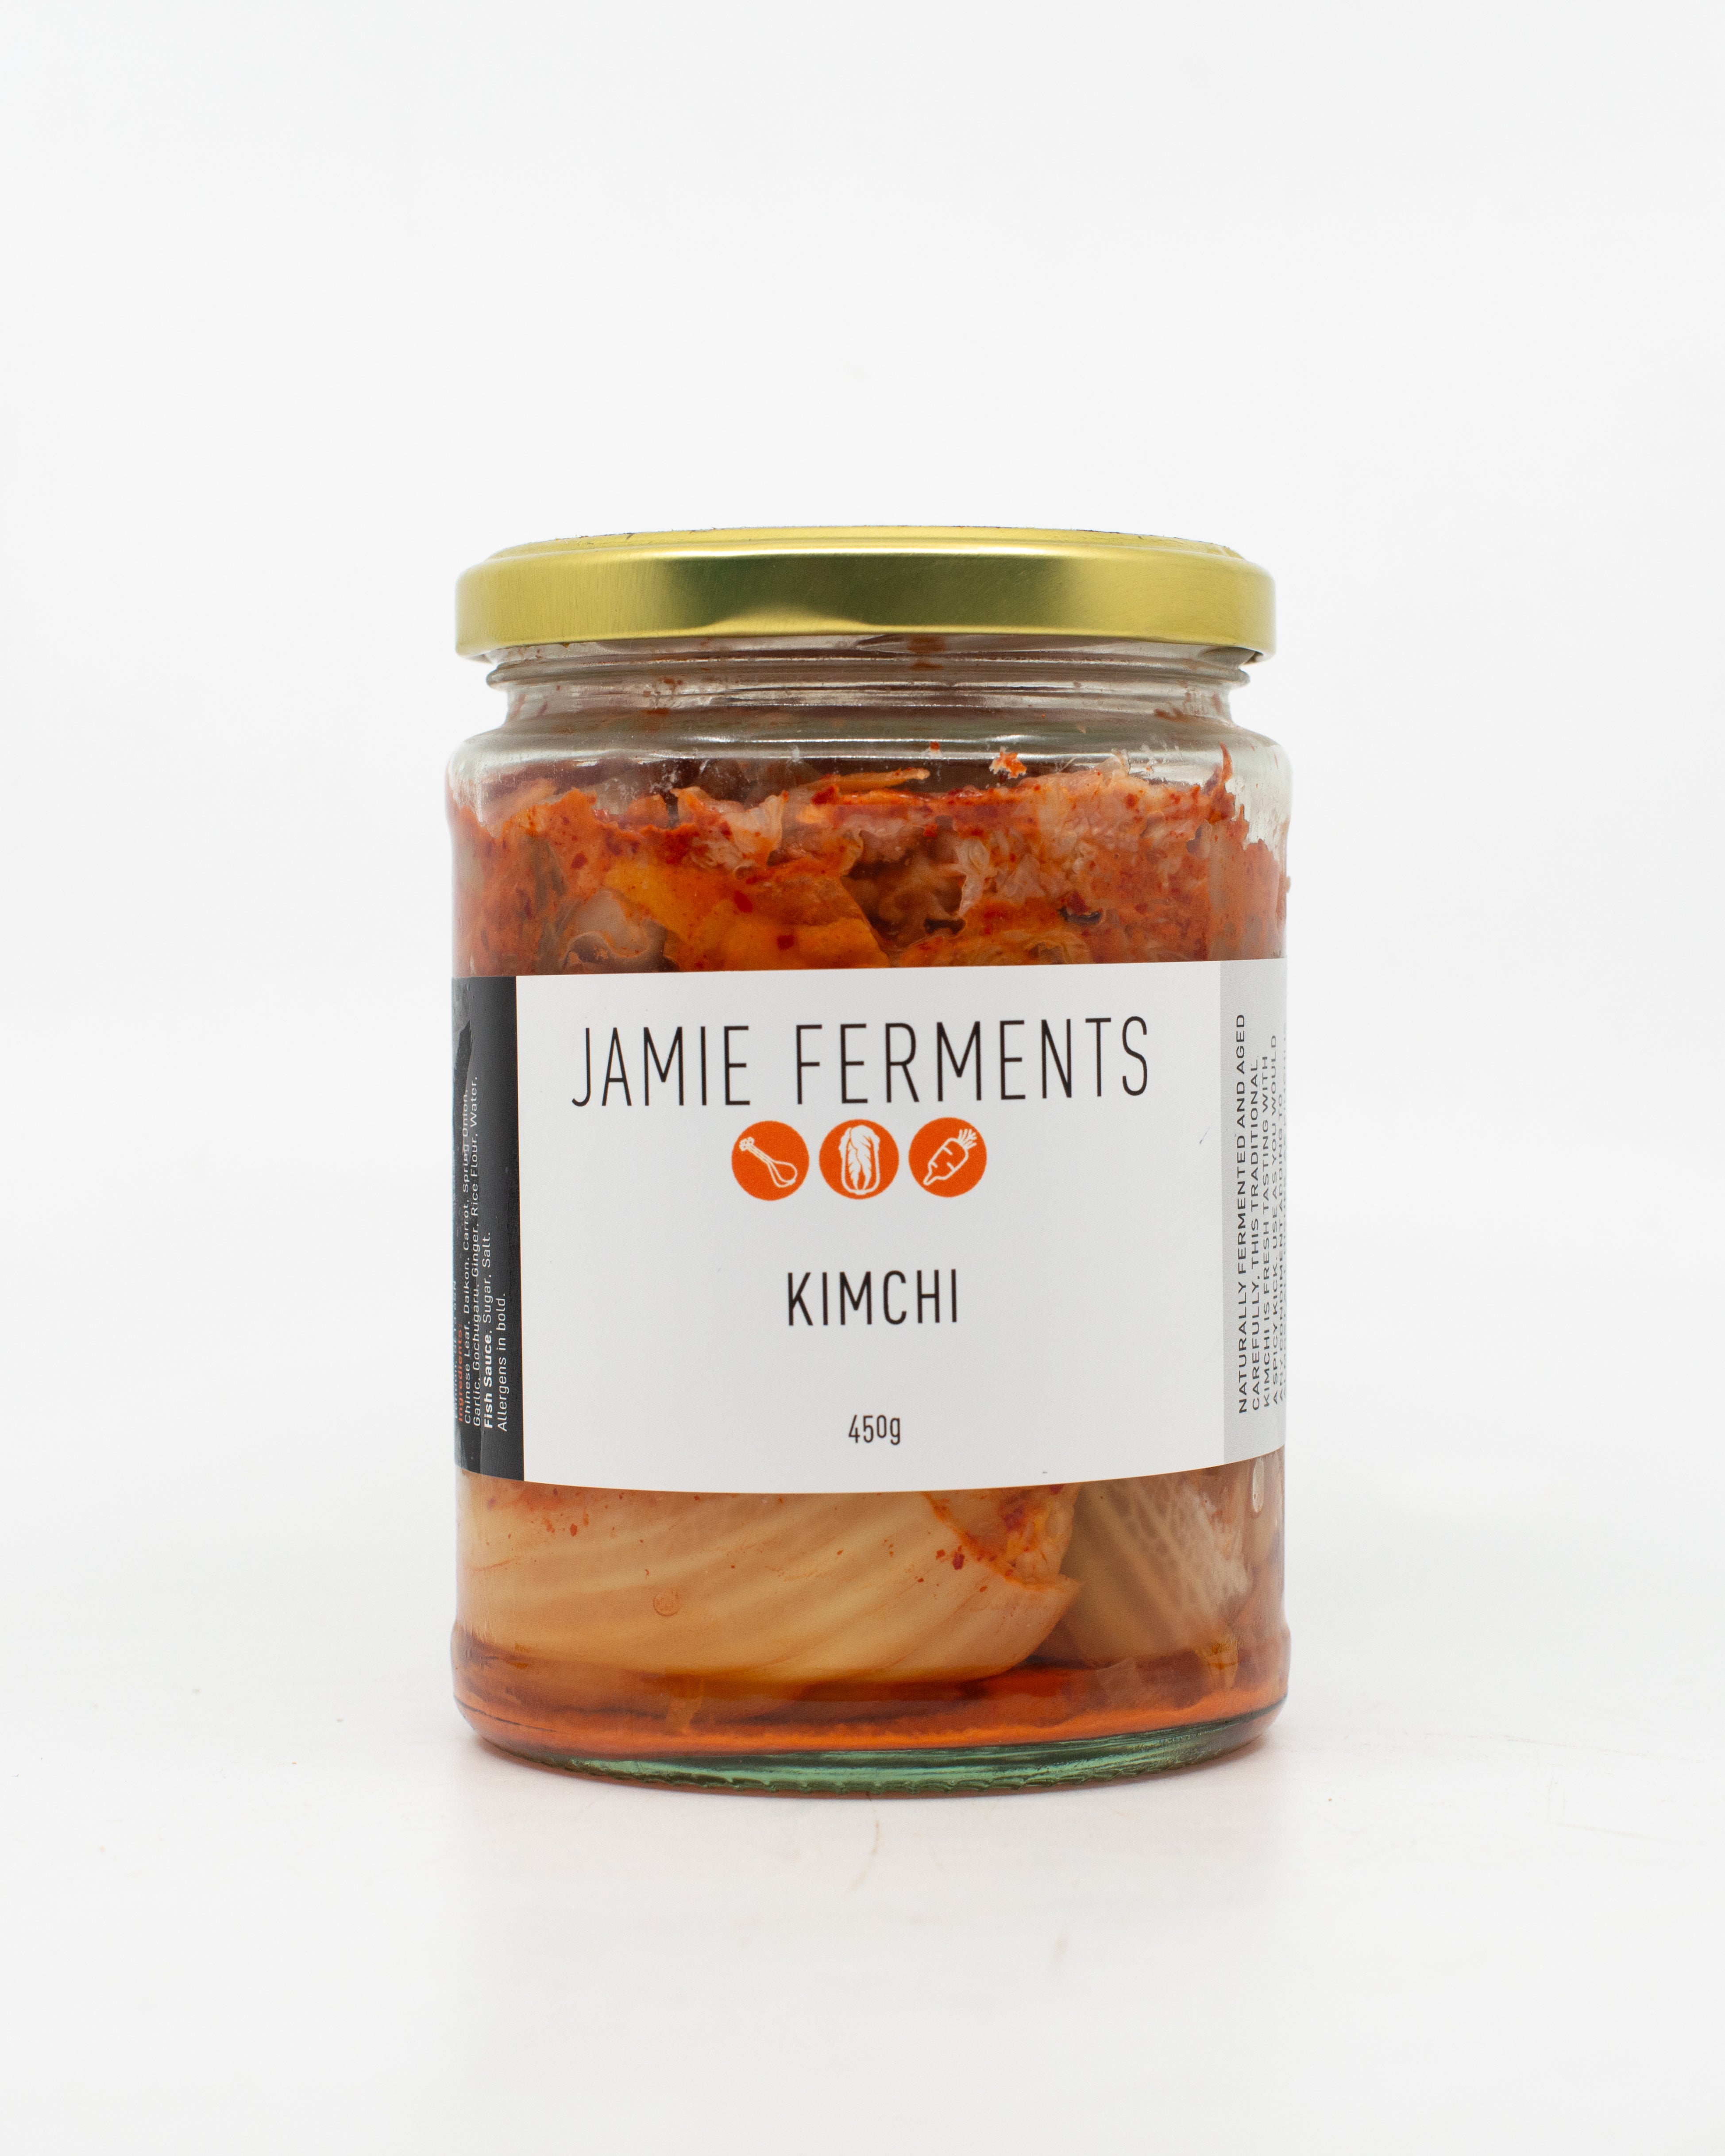 Jamie Ferments Kimchi 500g